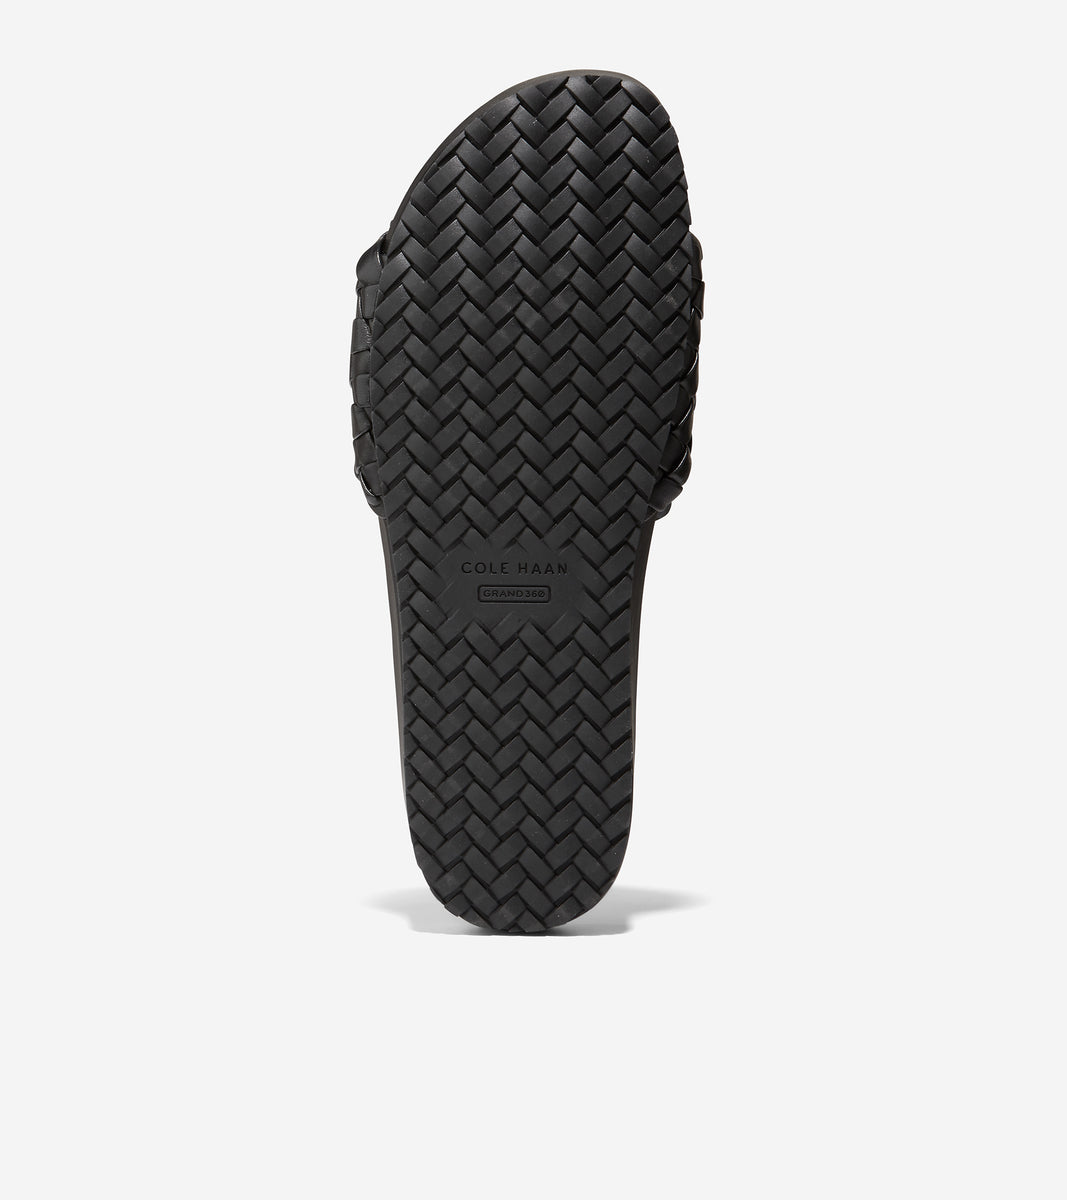 W25883-Mojave Slide Sandal-Black Leather